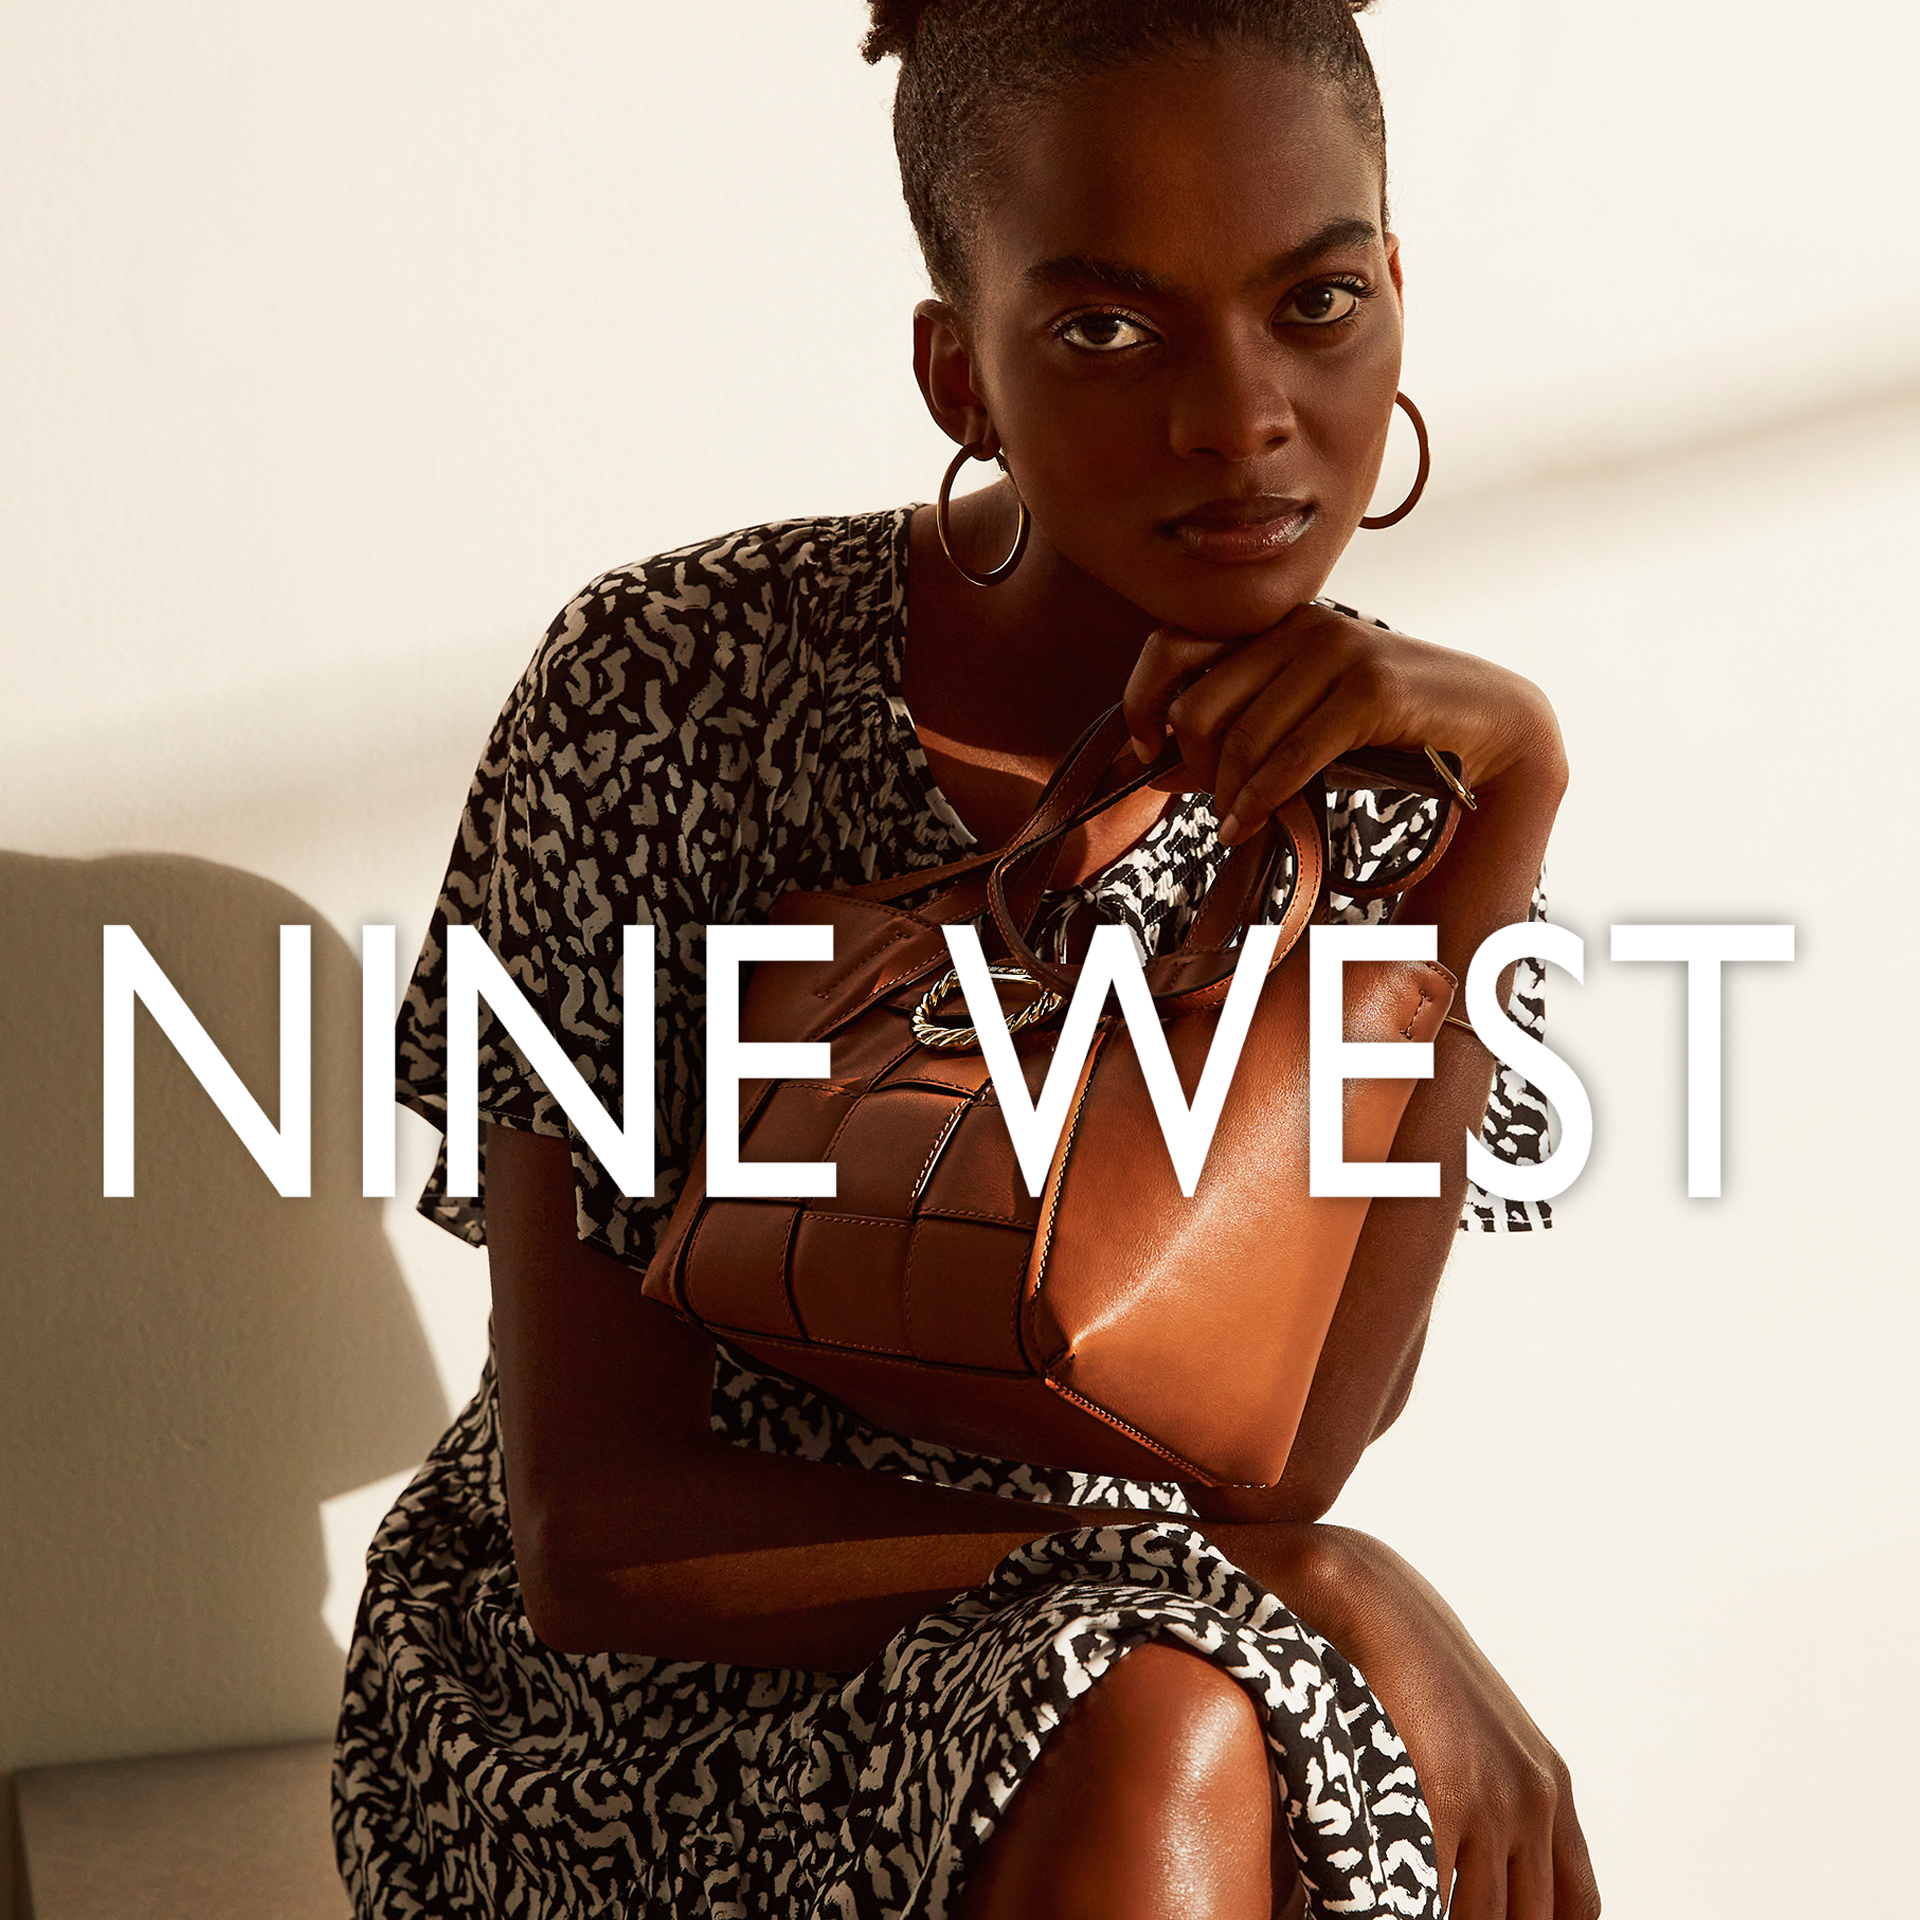 Brand logo of Nine West